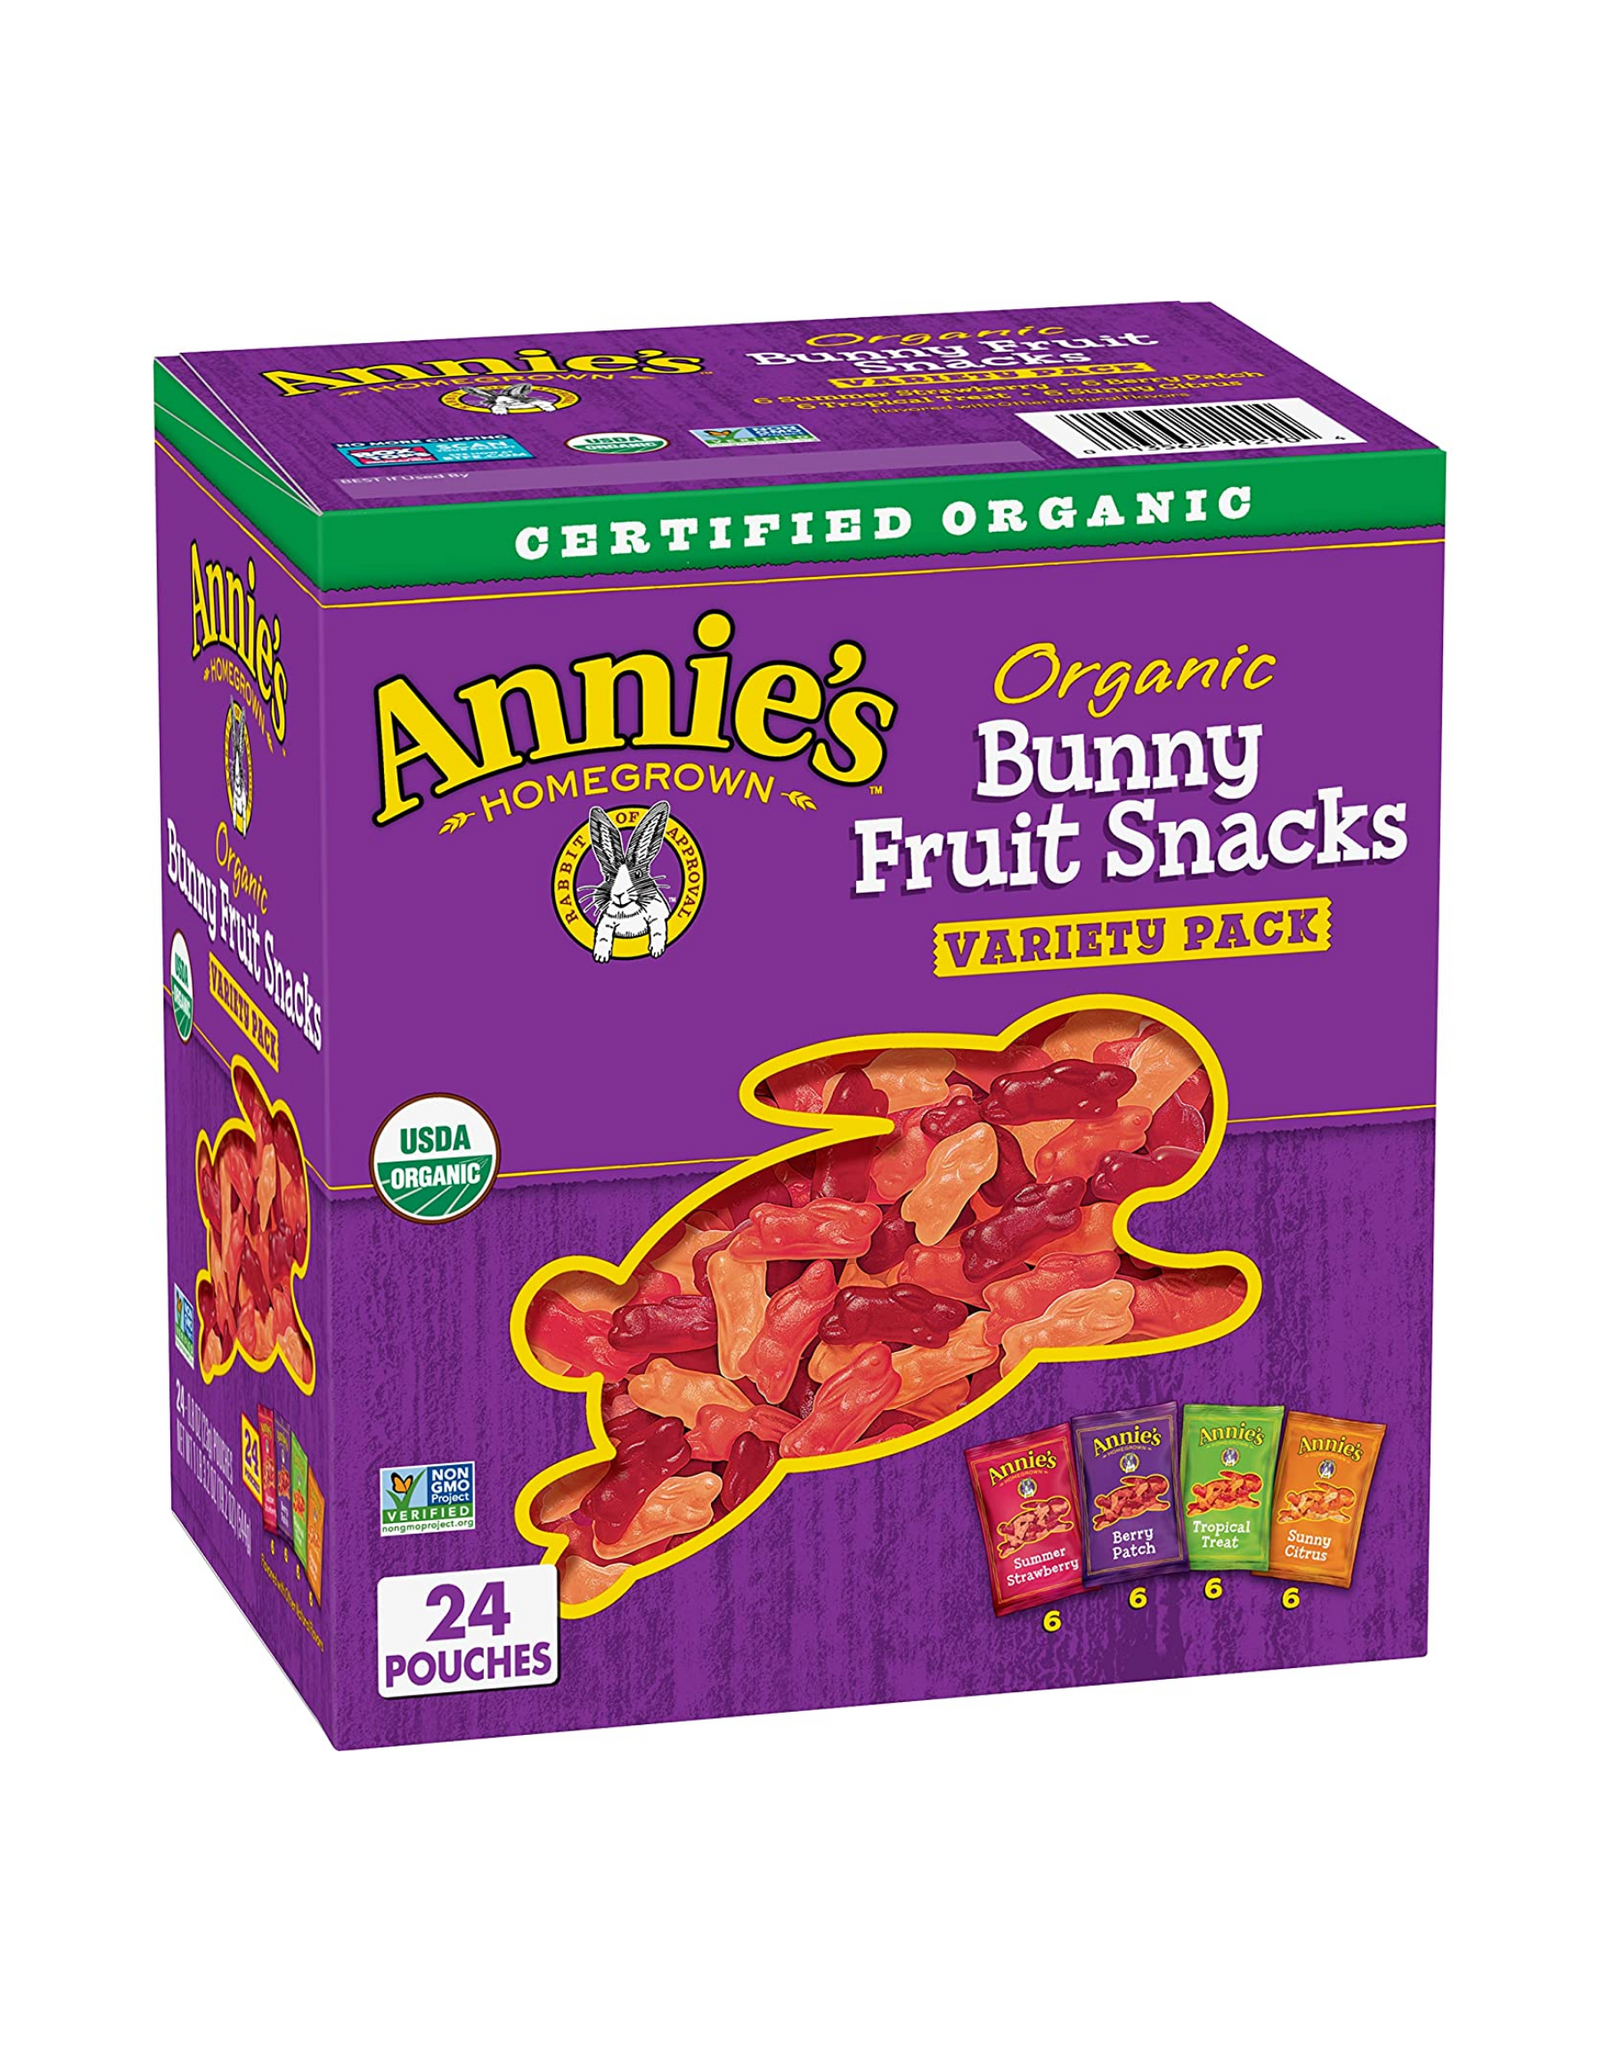 Annie's Organic Bunny Fruit Snacks, Variety Pack, Gluten Free, Vegan, 24 ct